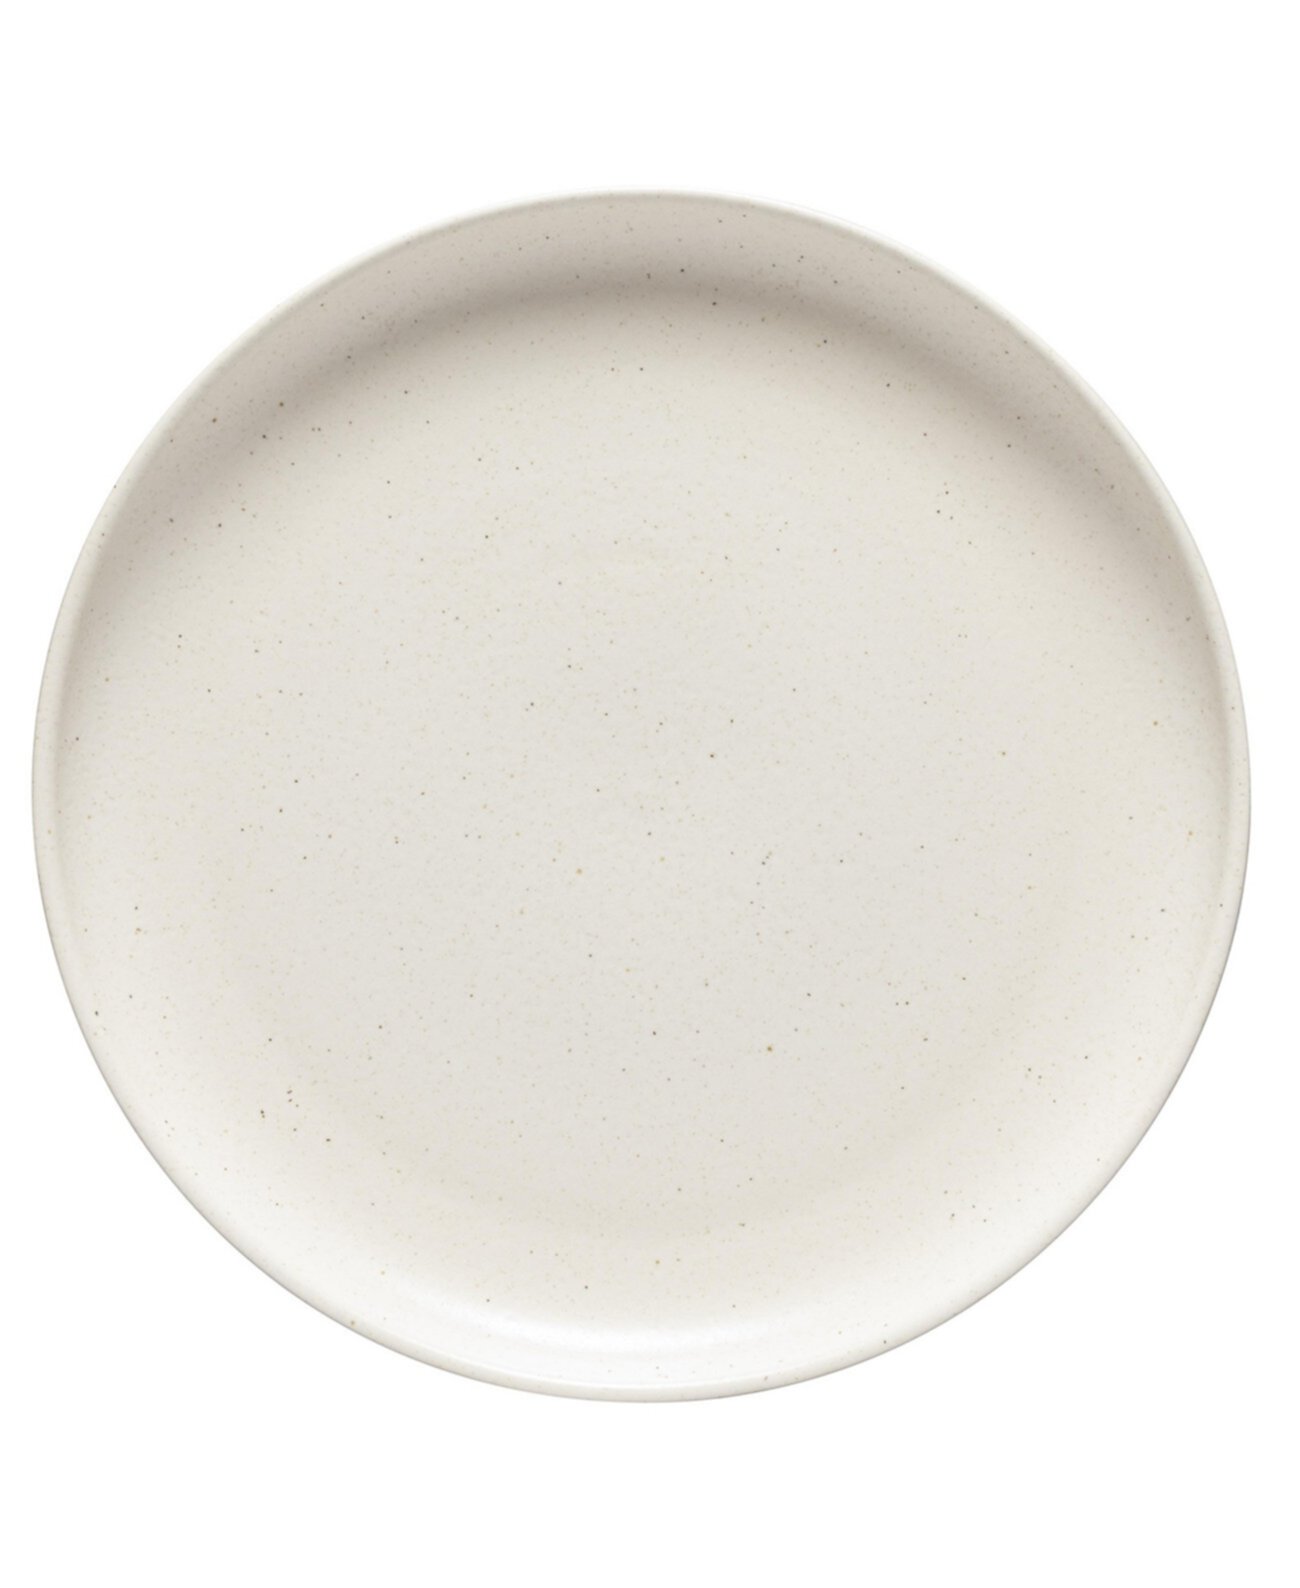 Обеденная тарелка Pacifica 11 дюймов Casafina